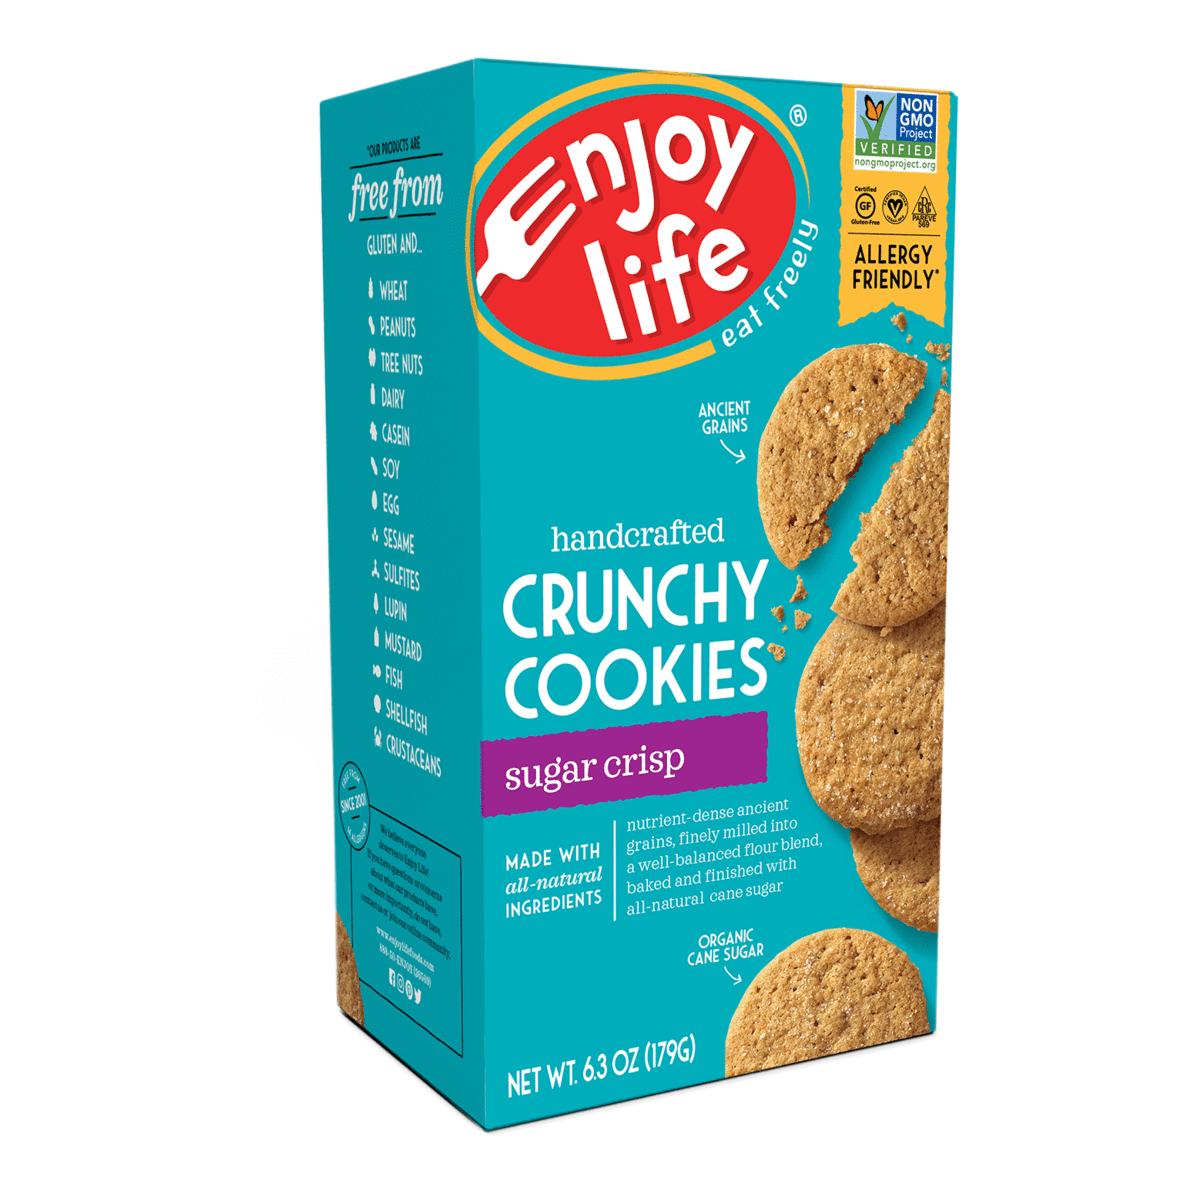 Enjoy Life Crunchy Cookies Sugar Crisp Allergy Friendly Gluten Free